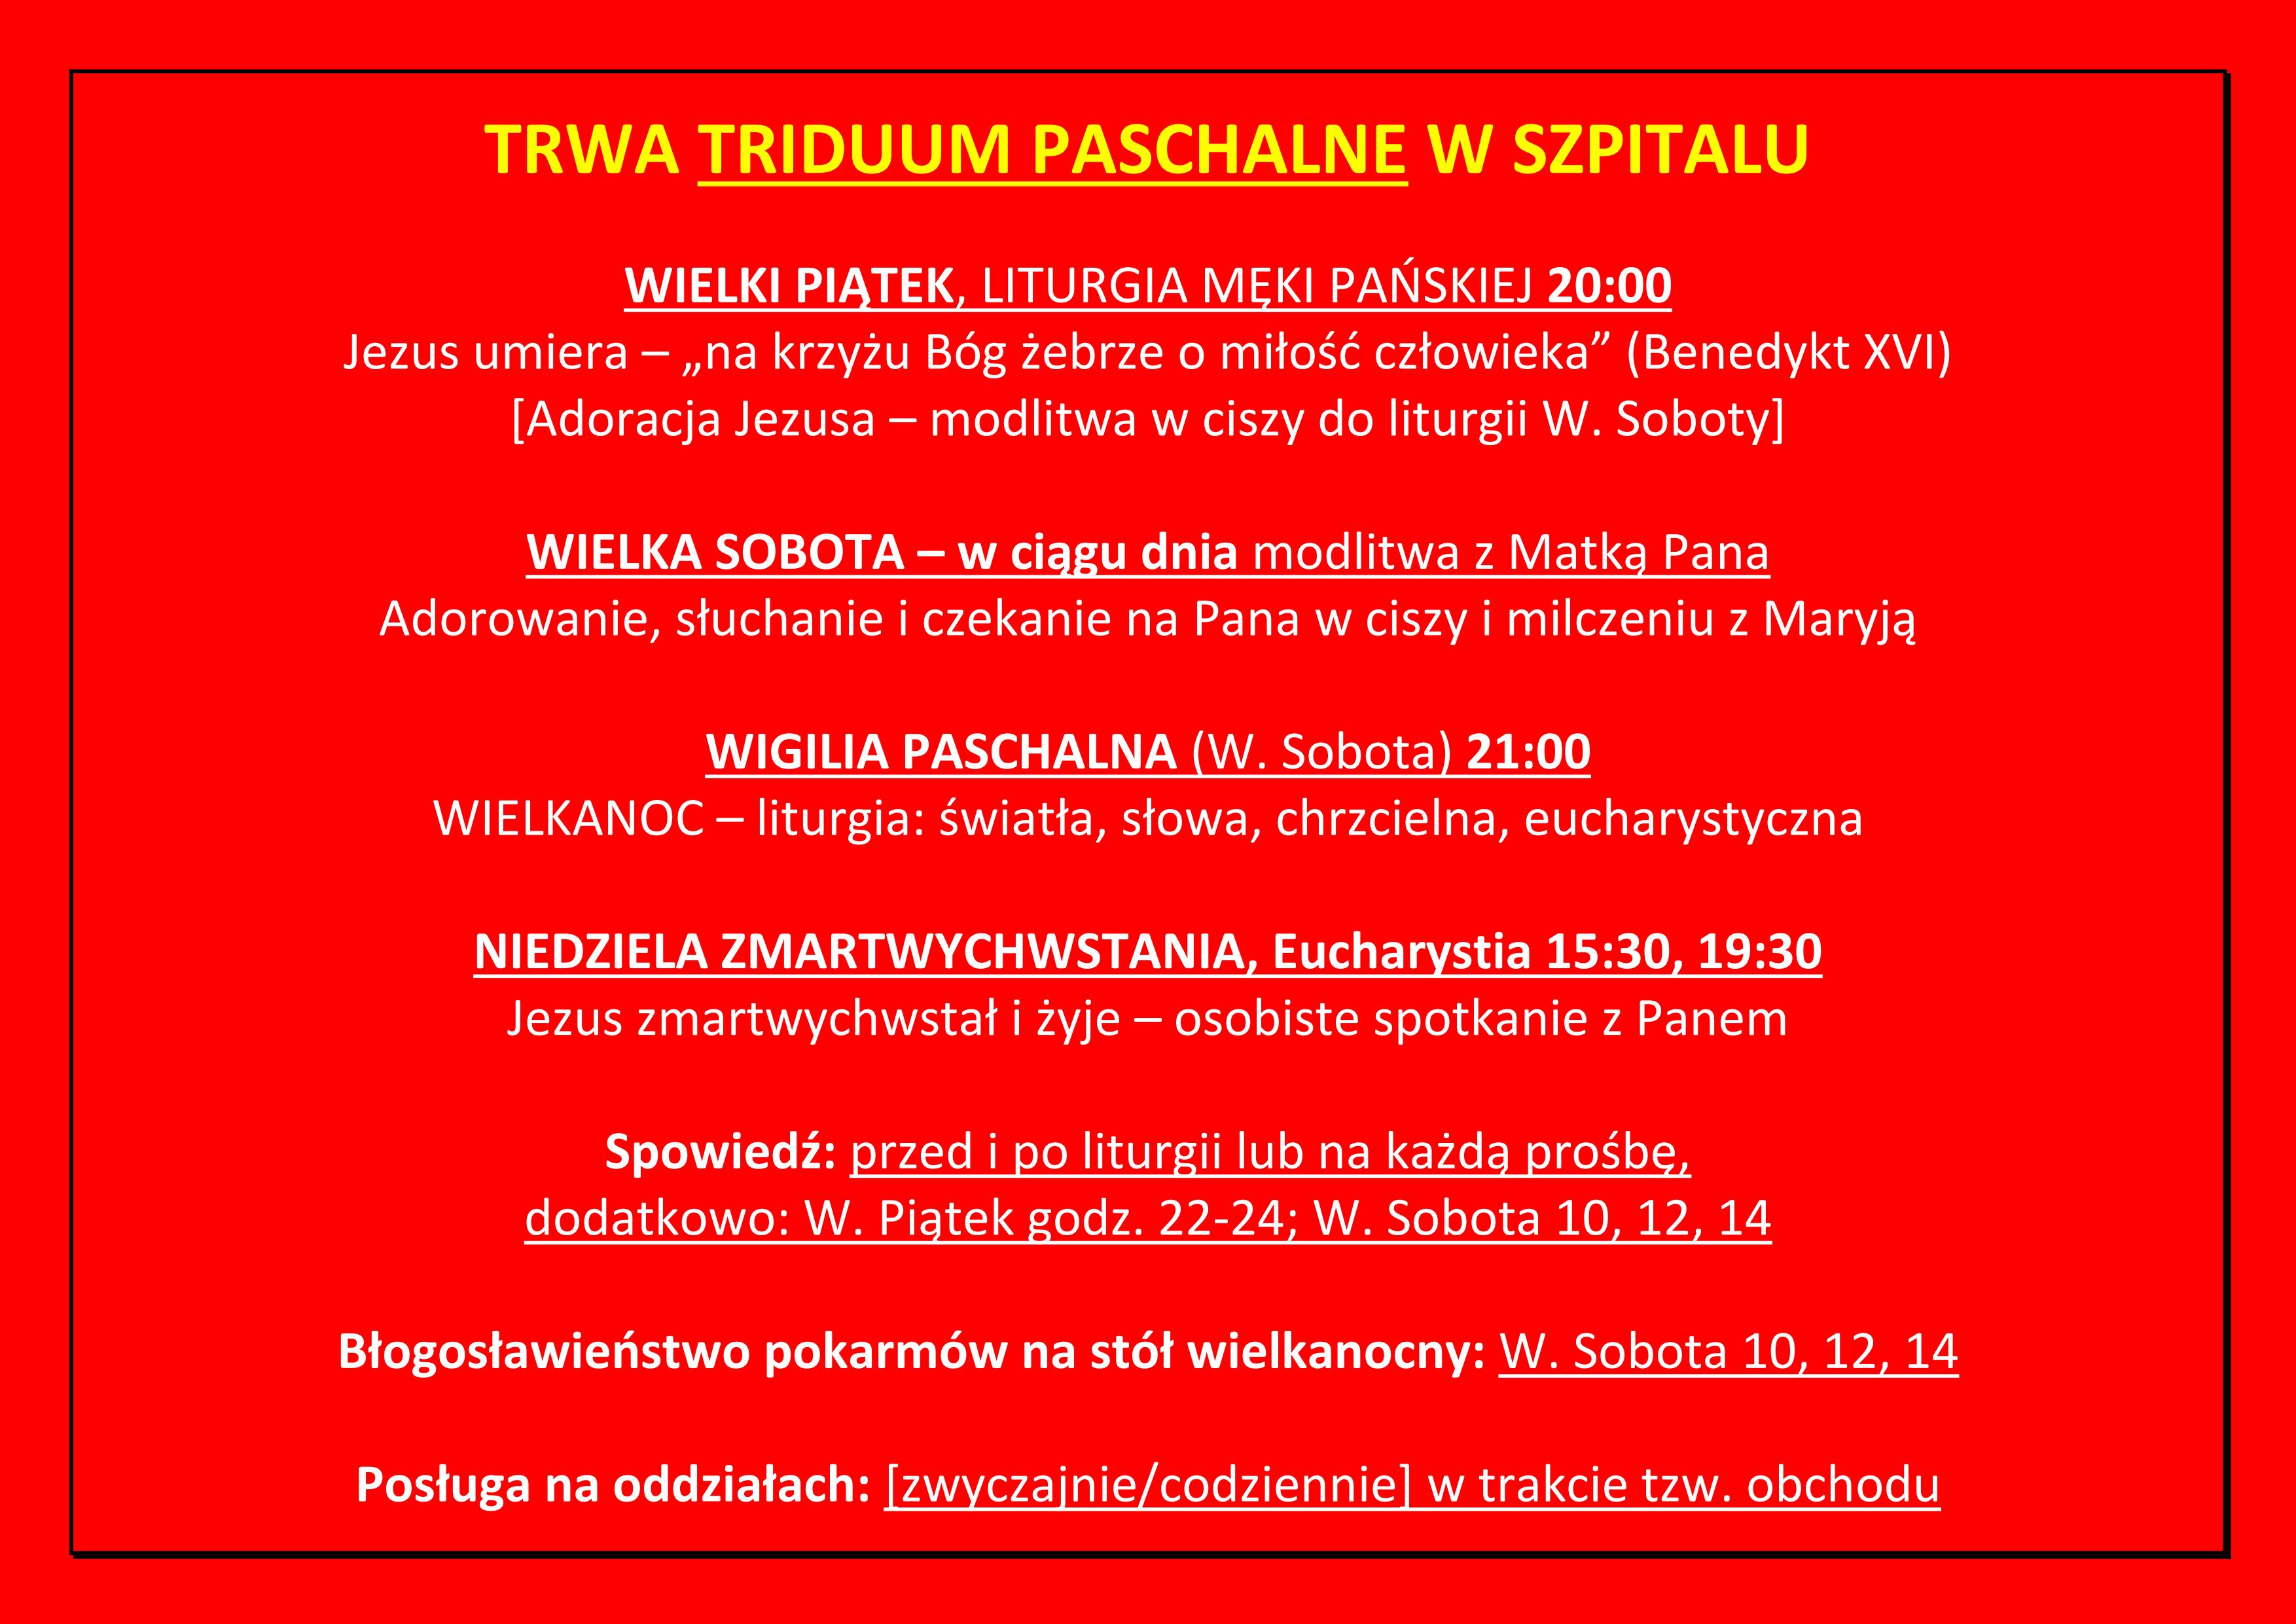 You are currently viewing TRWA TRIDUUM PASCHALNE W SZPITALU